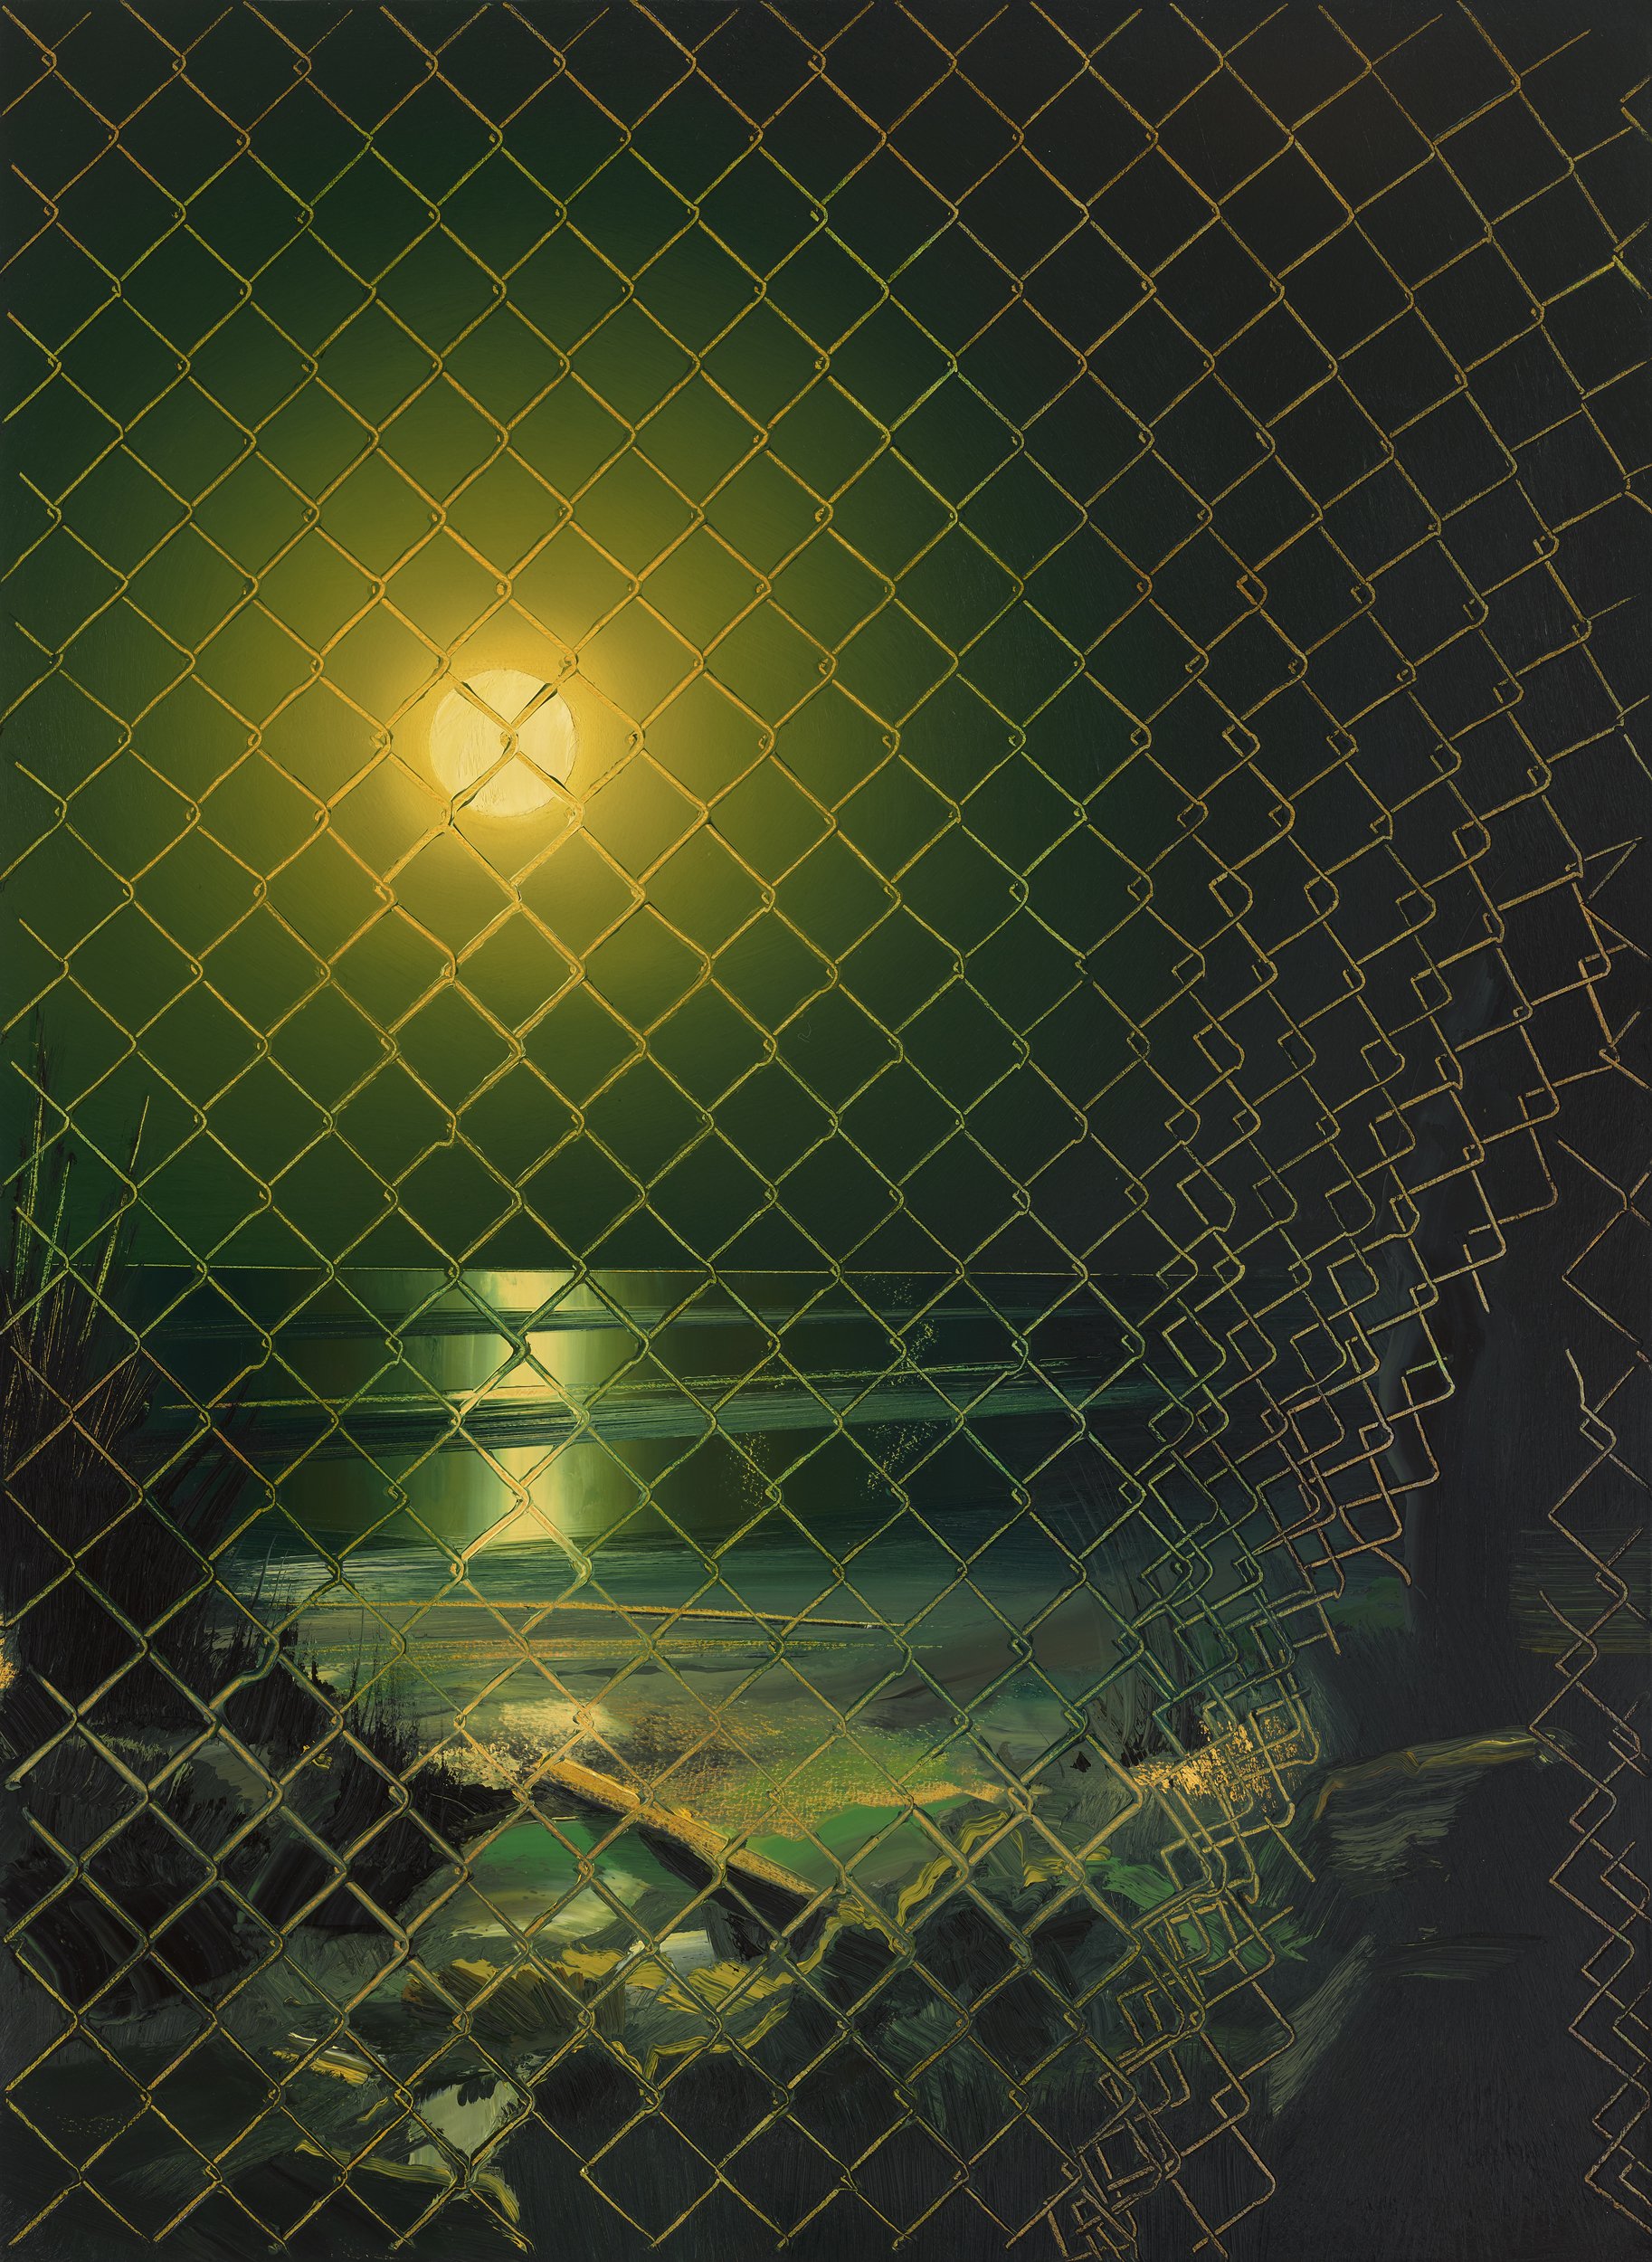 Fence/Nightswim (#2034)